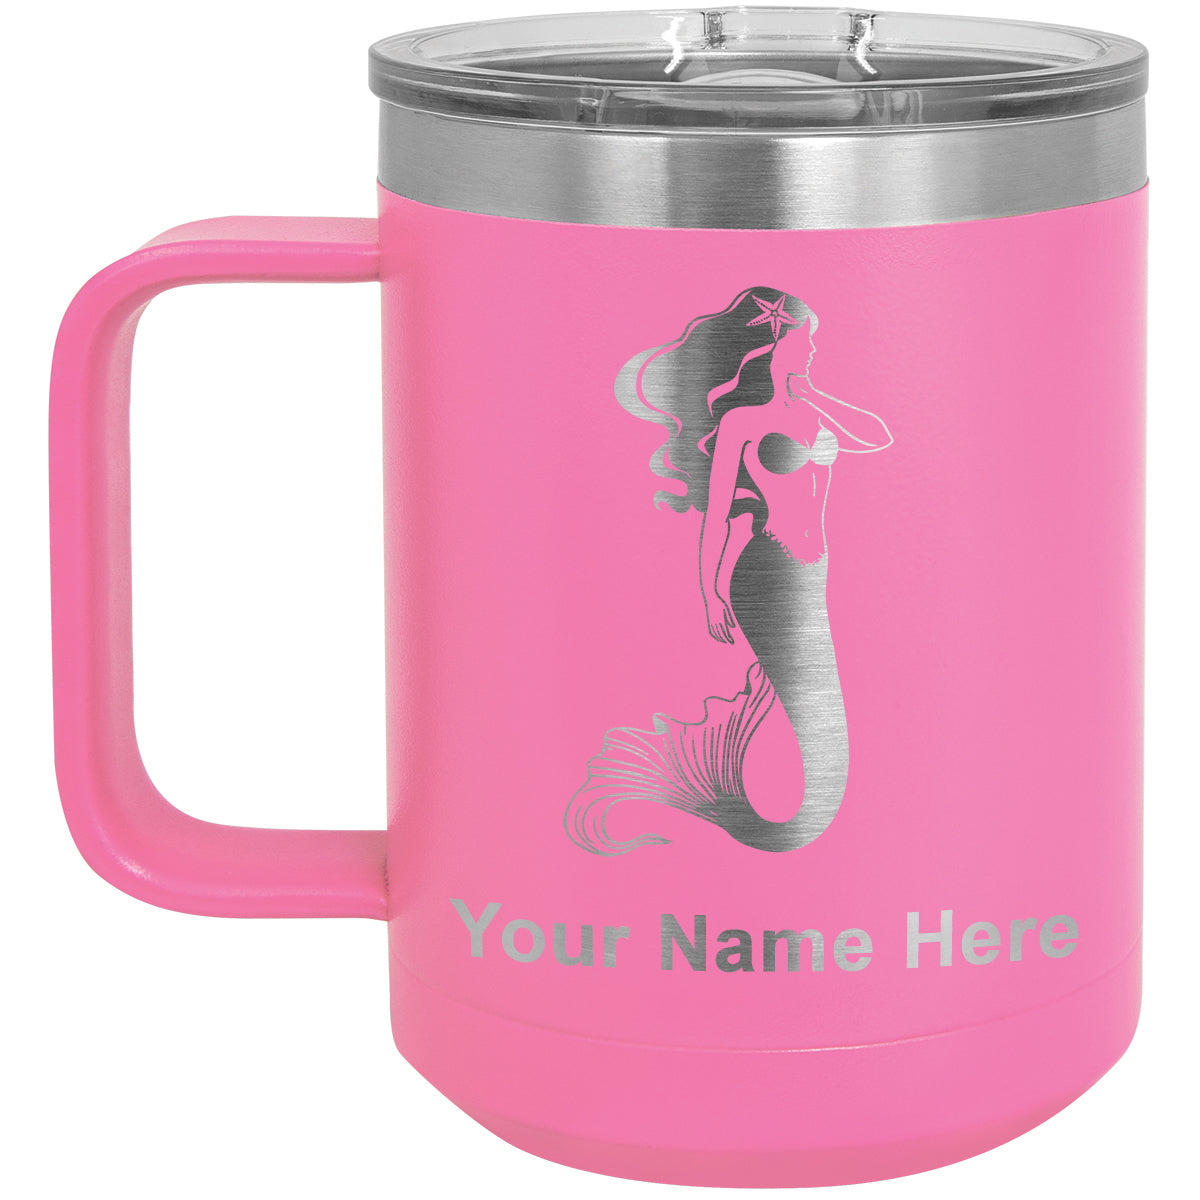 15oz Vacuum Insulated Coffee Mug, Mermaid, Personalized Engraving Included